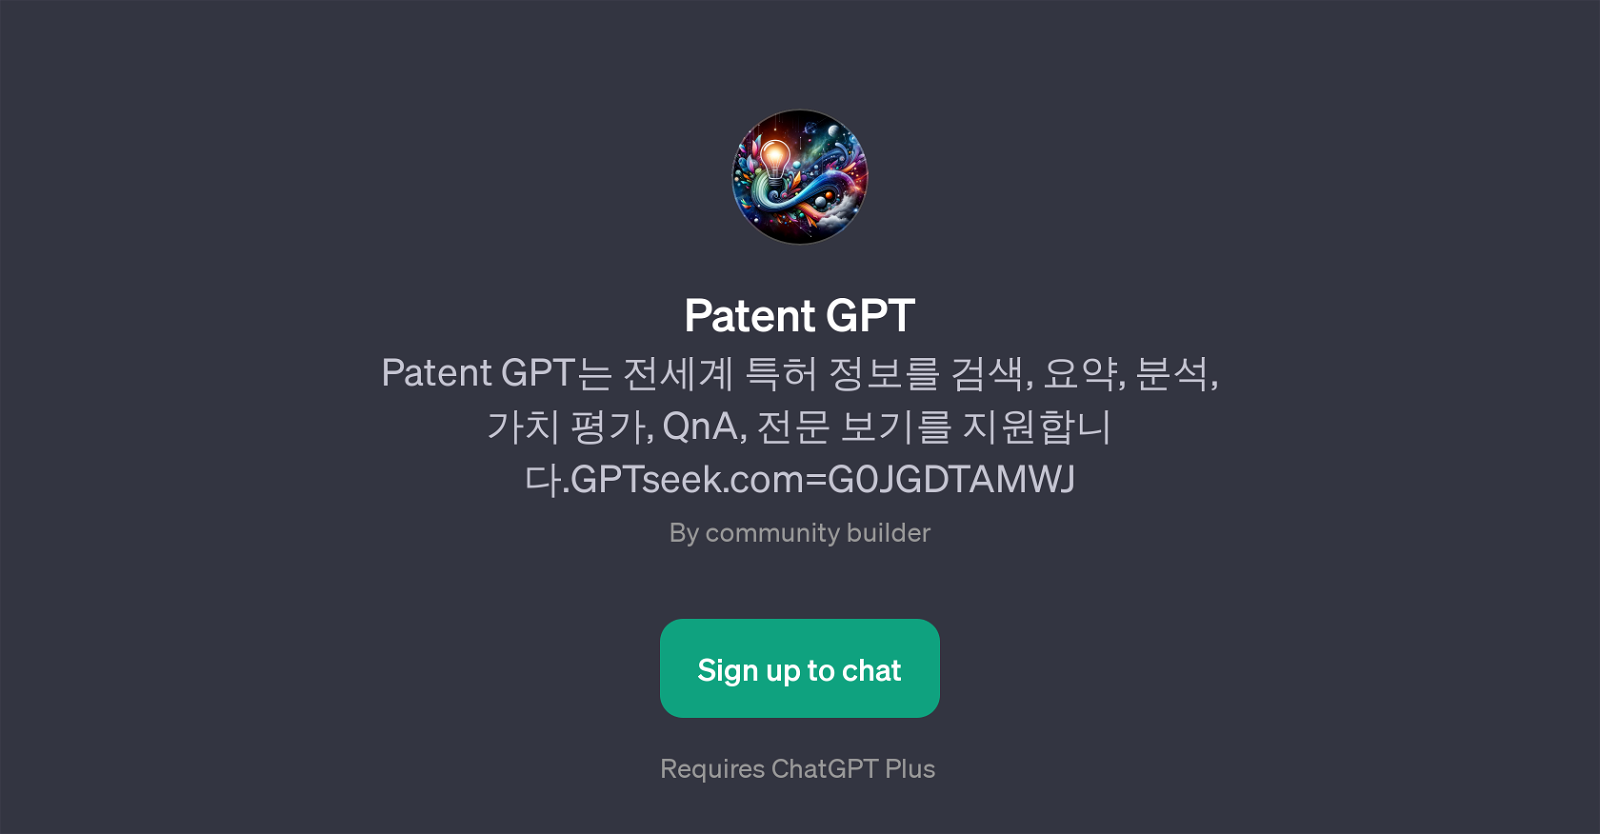 Patent GPT website